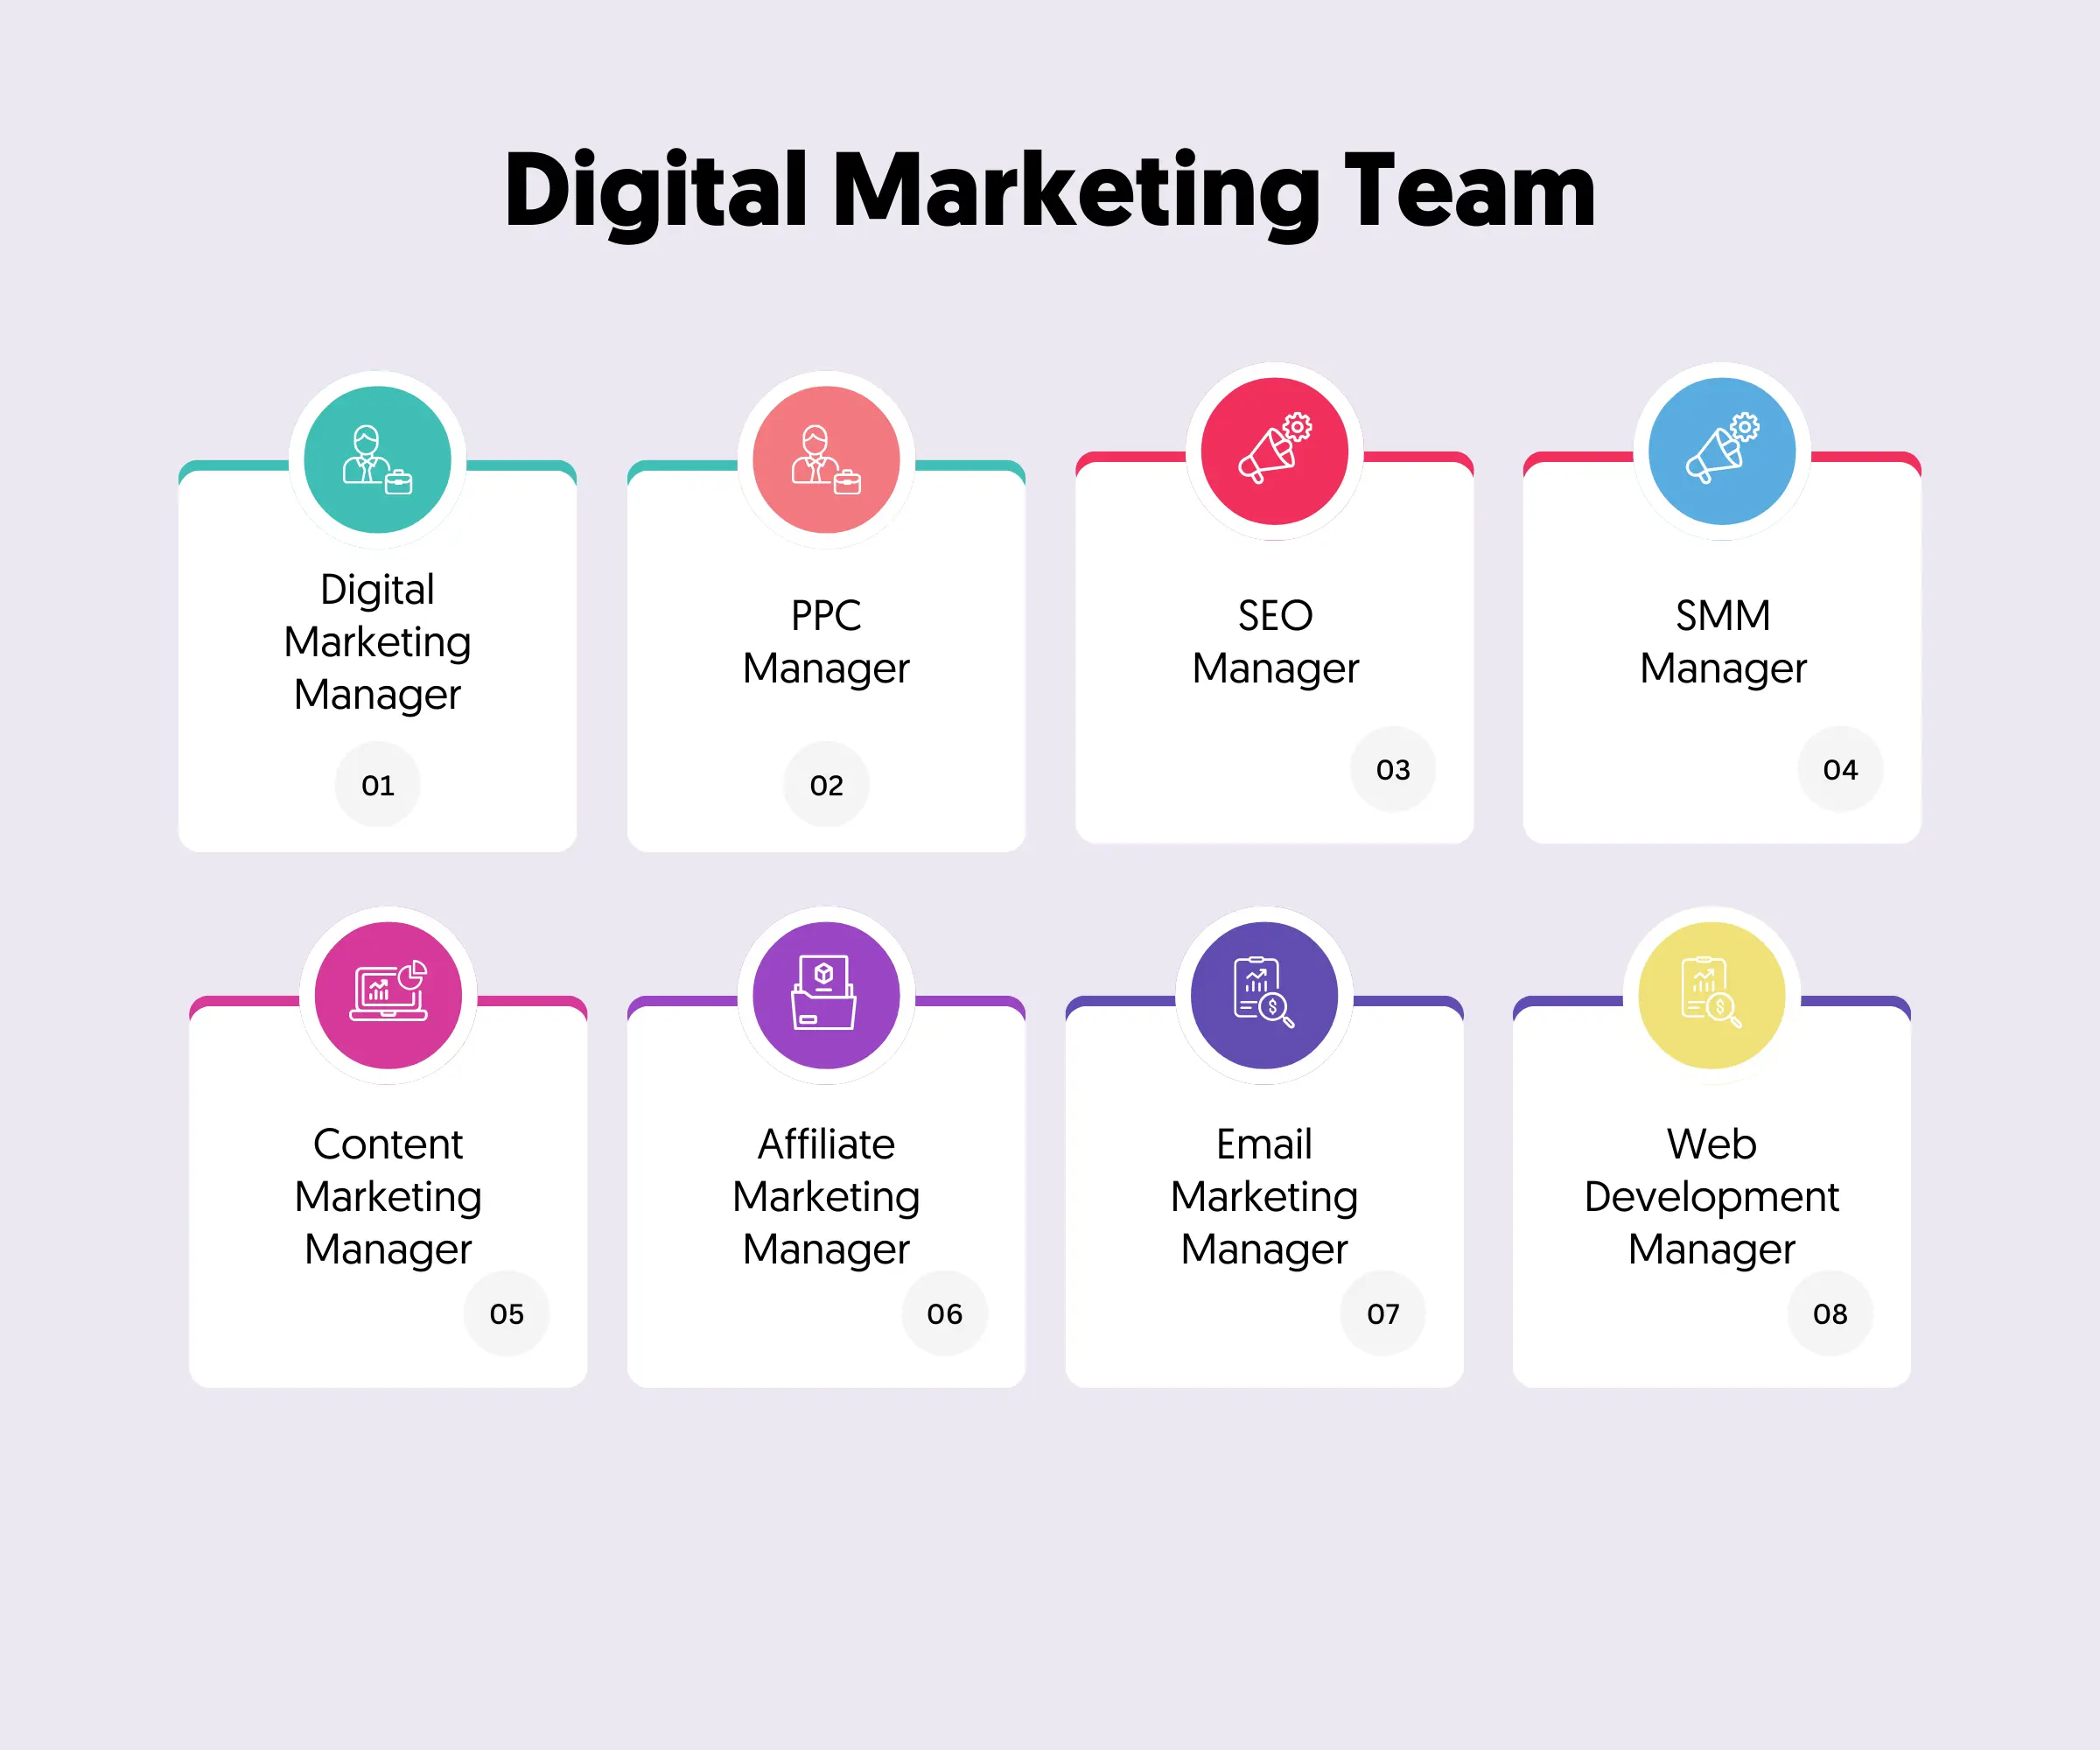 Digital Marketing Team Key Roles